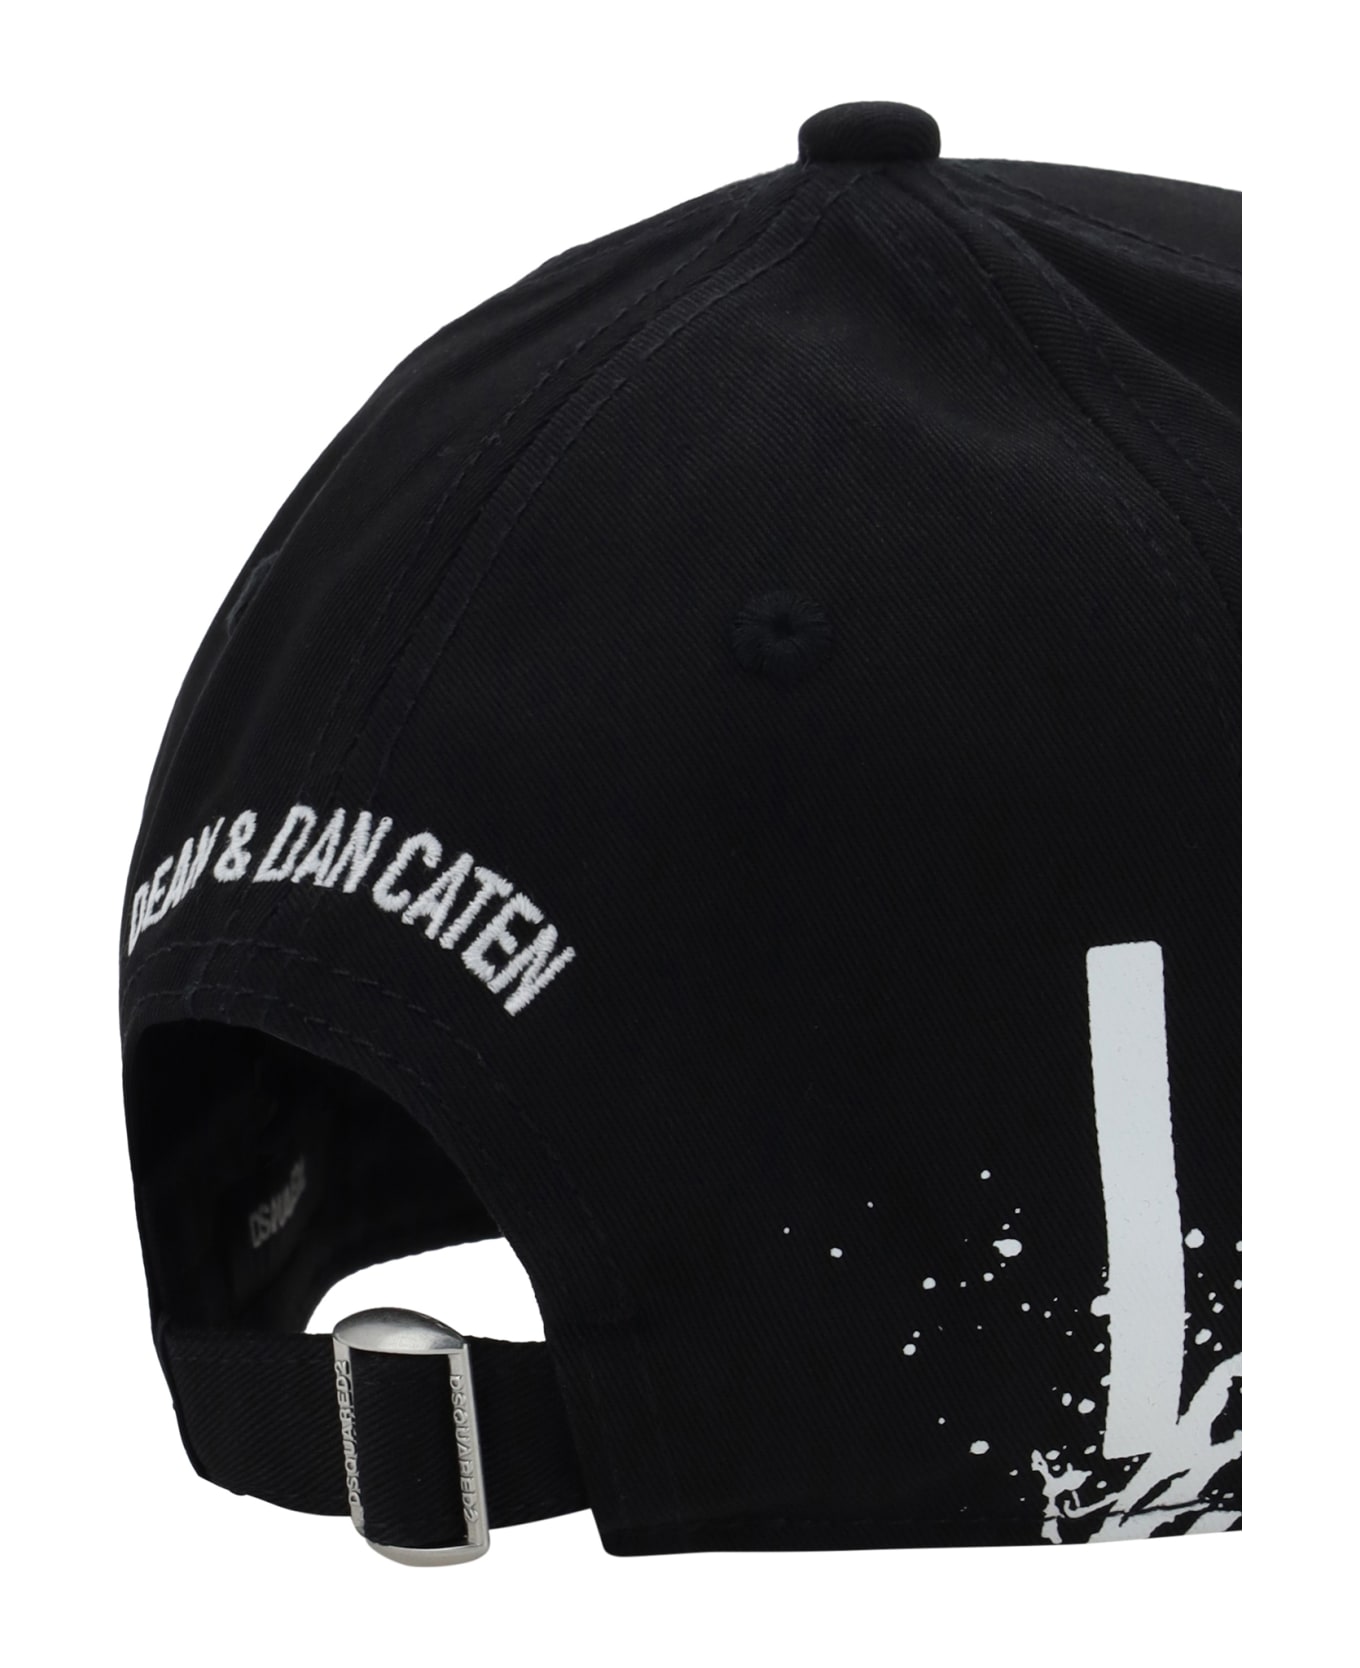 Dsquared2 Black Cotton Hat - M063 帽子